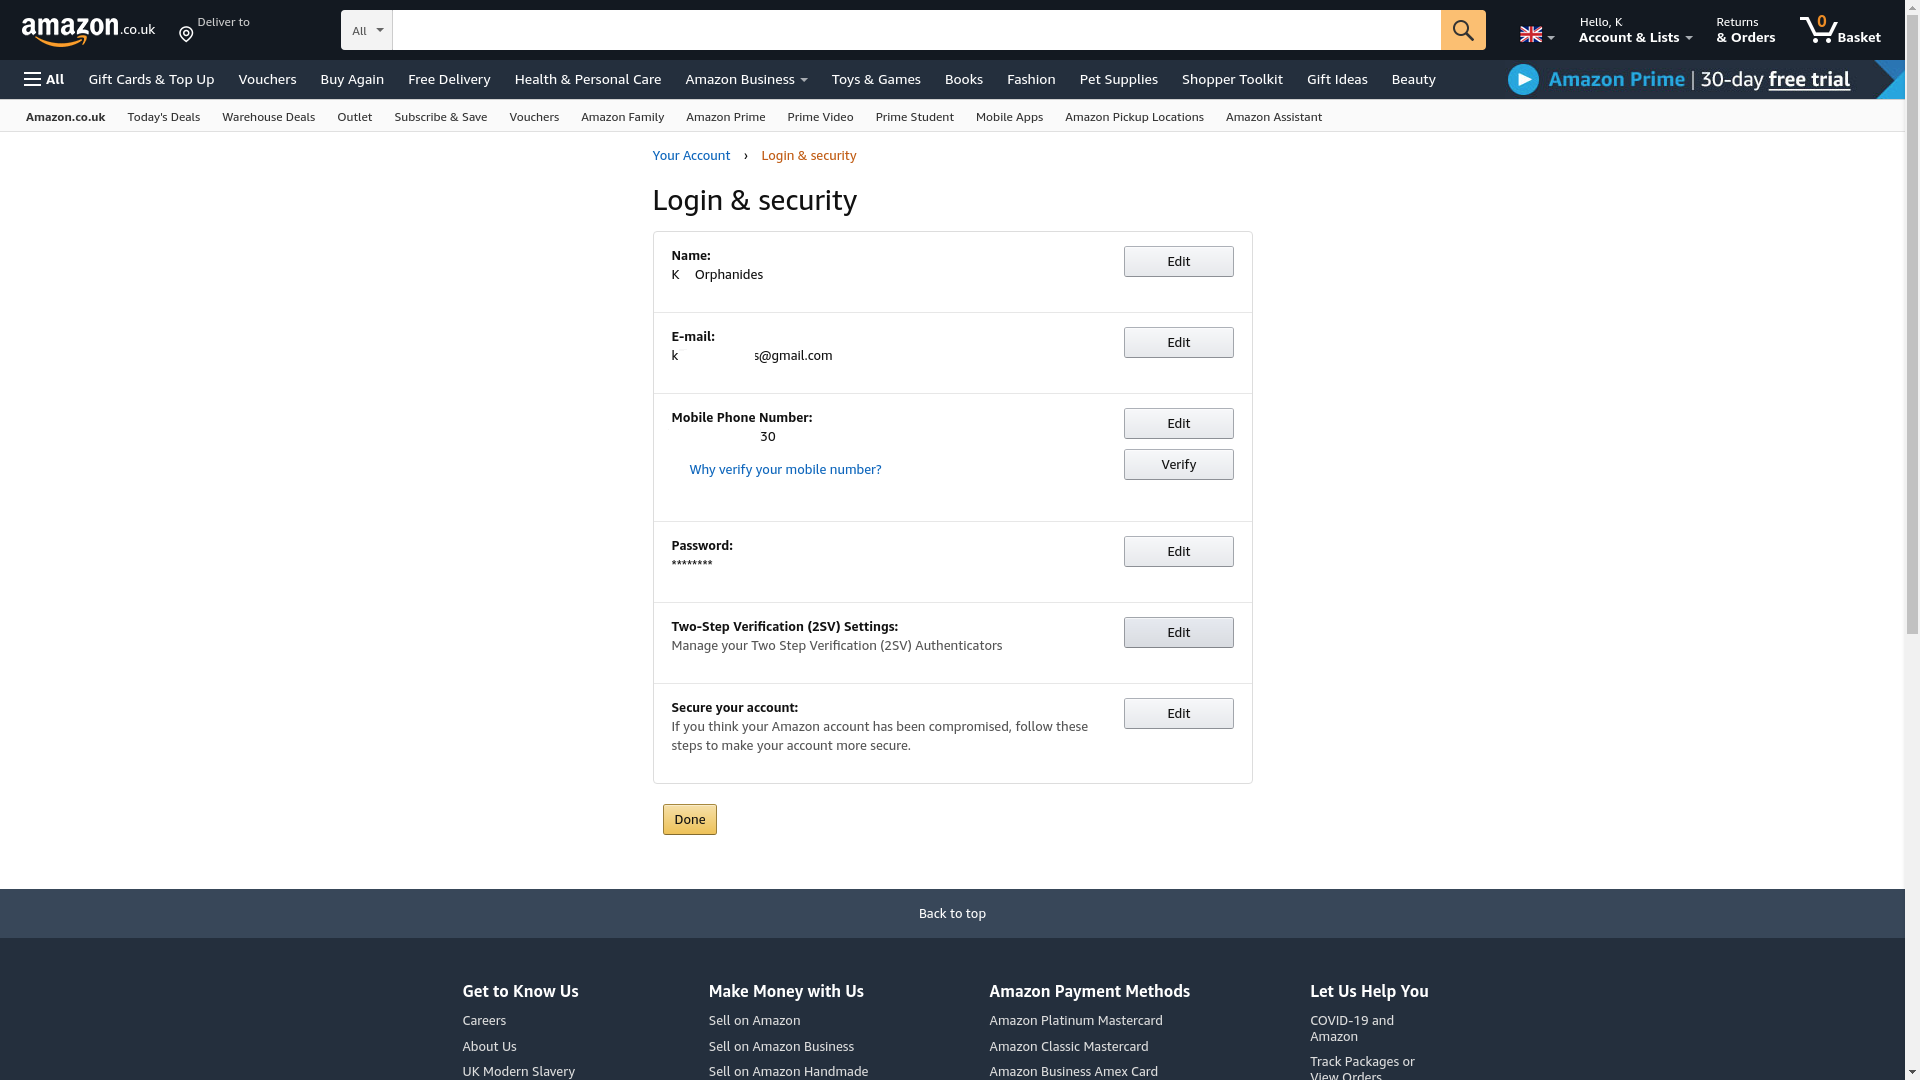 Amazon's login and security settings screen